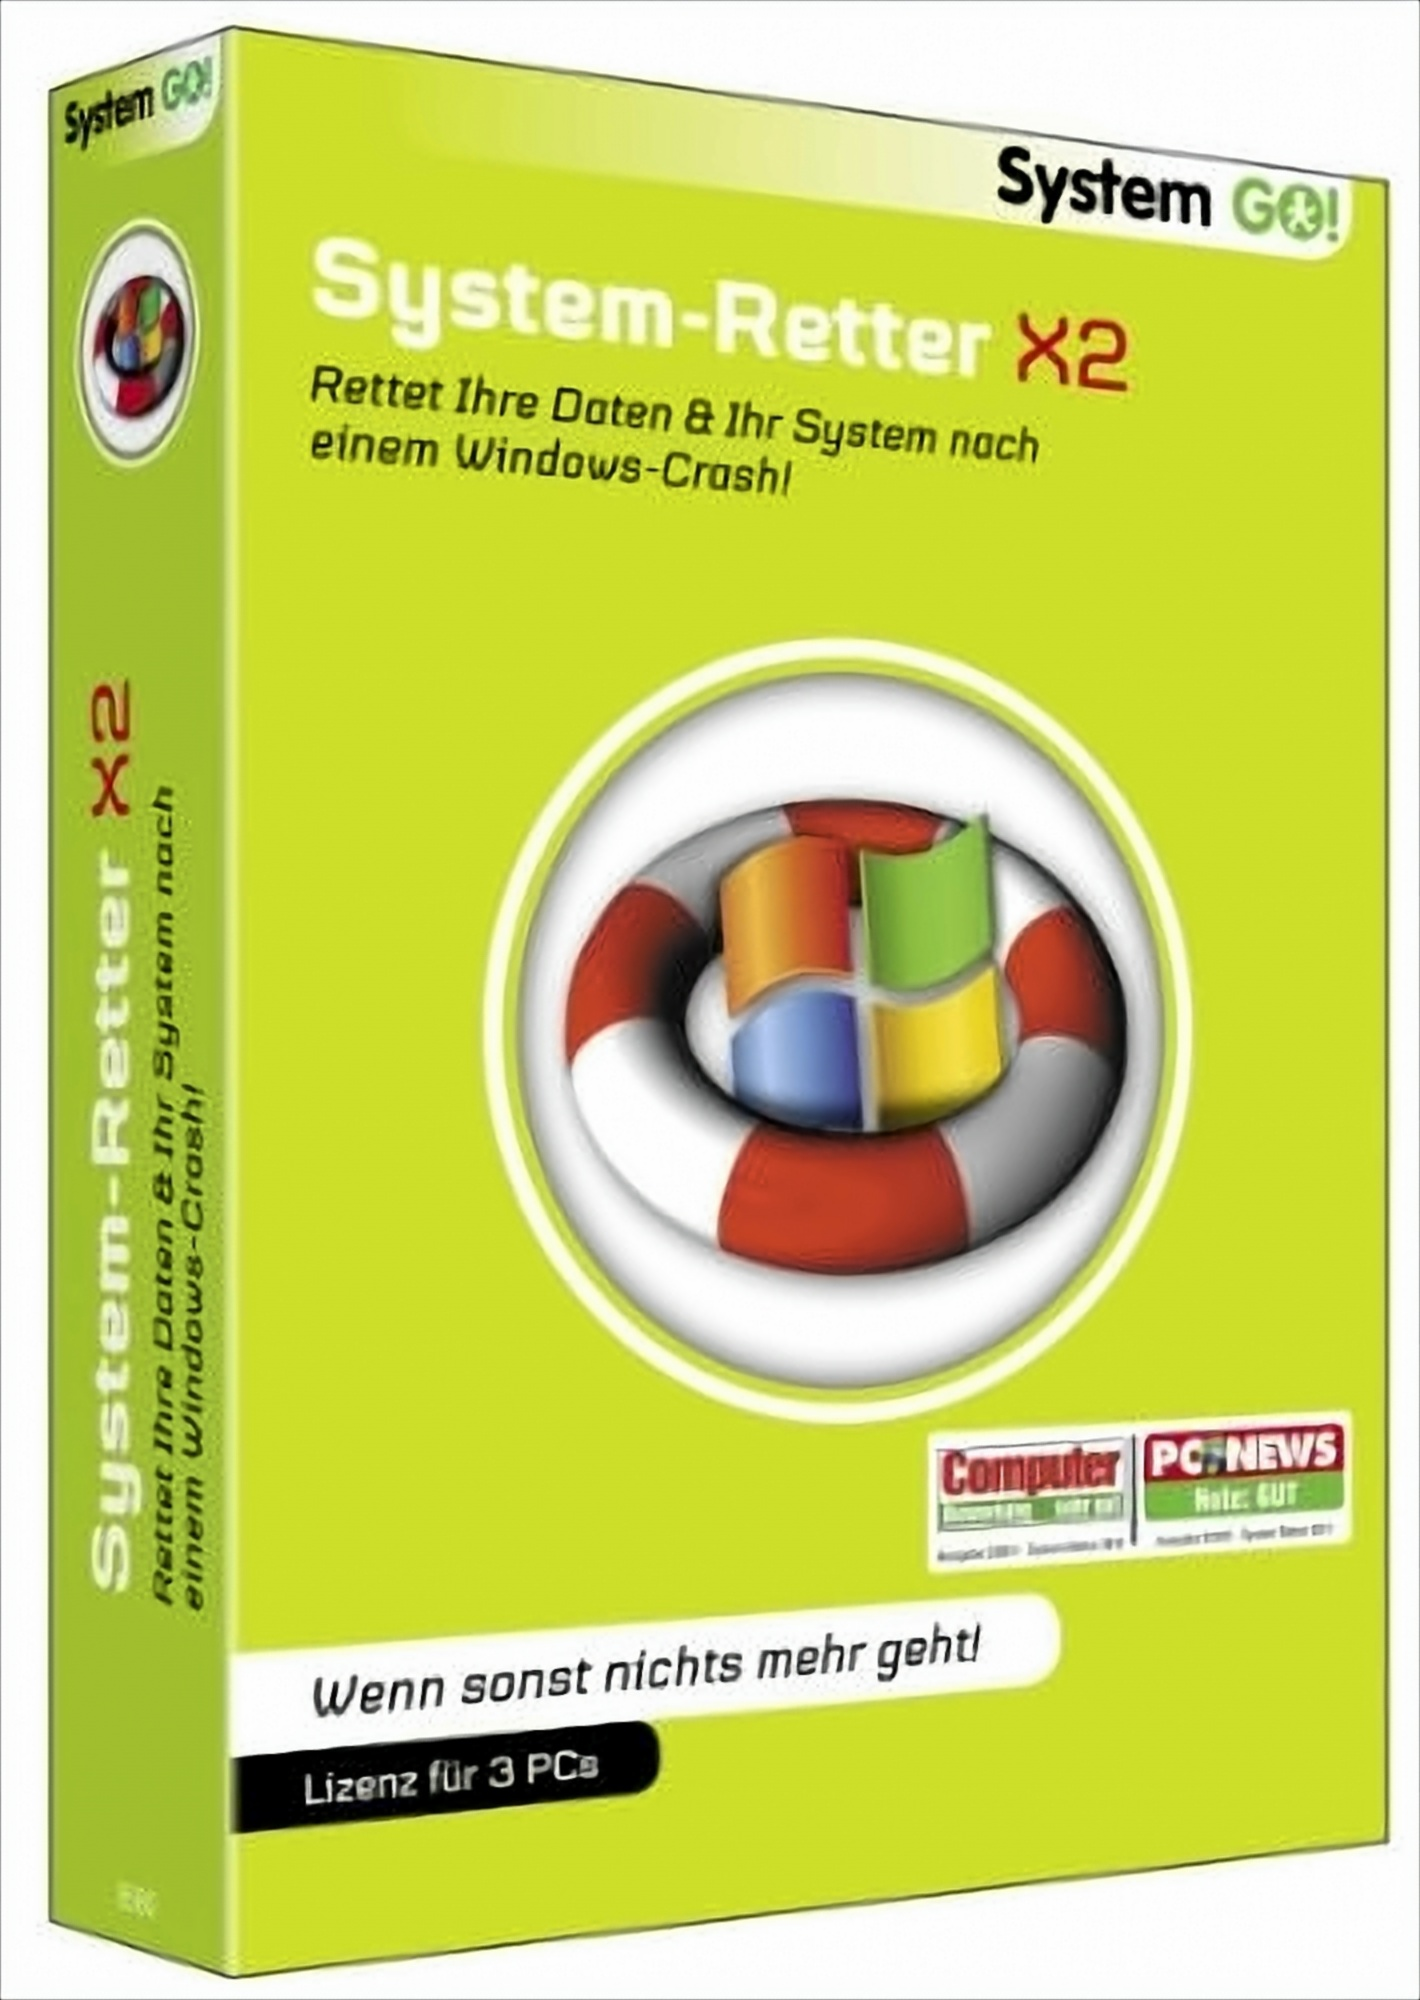 System Go! System-Retter [PC] X2 